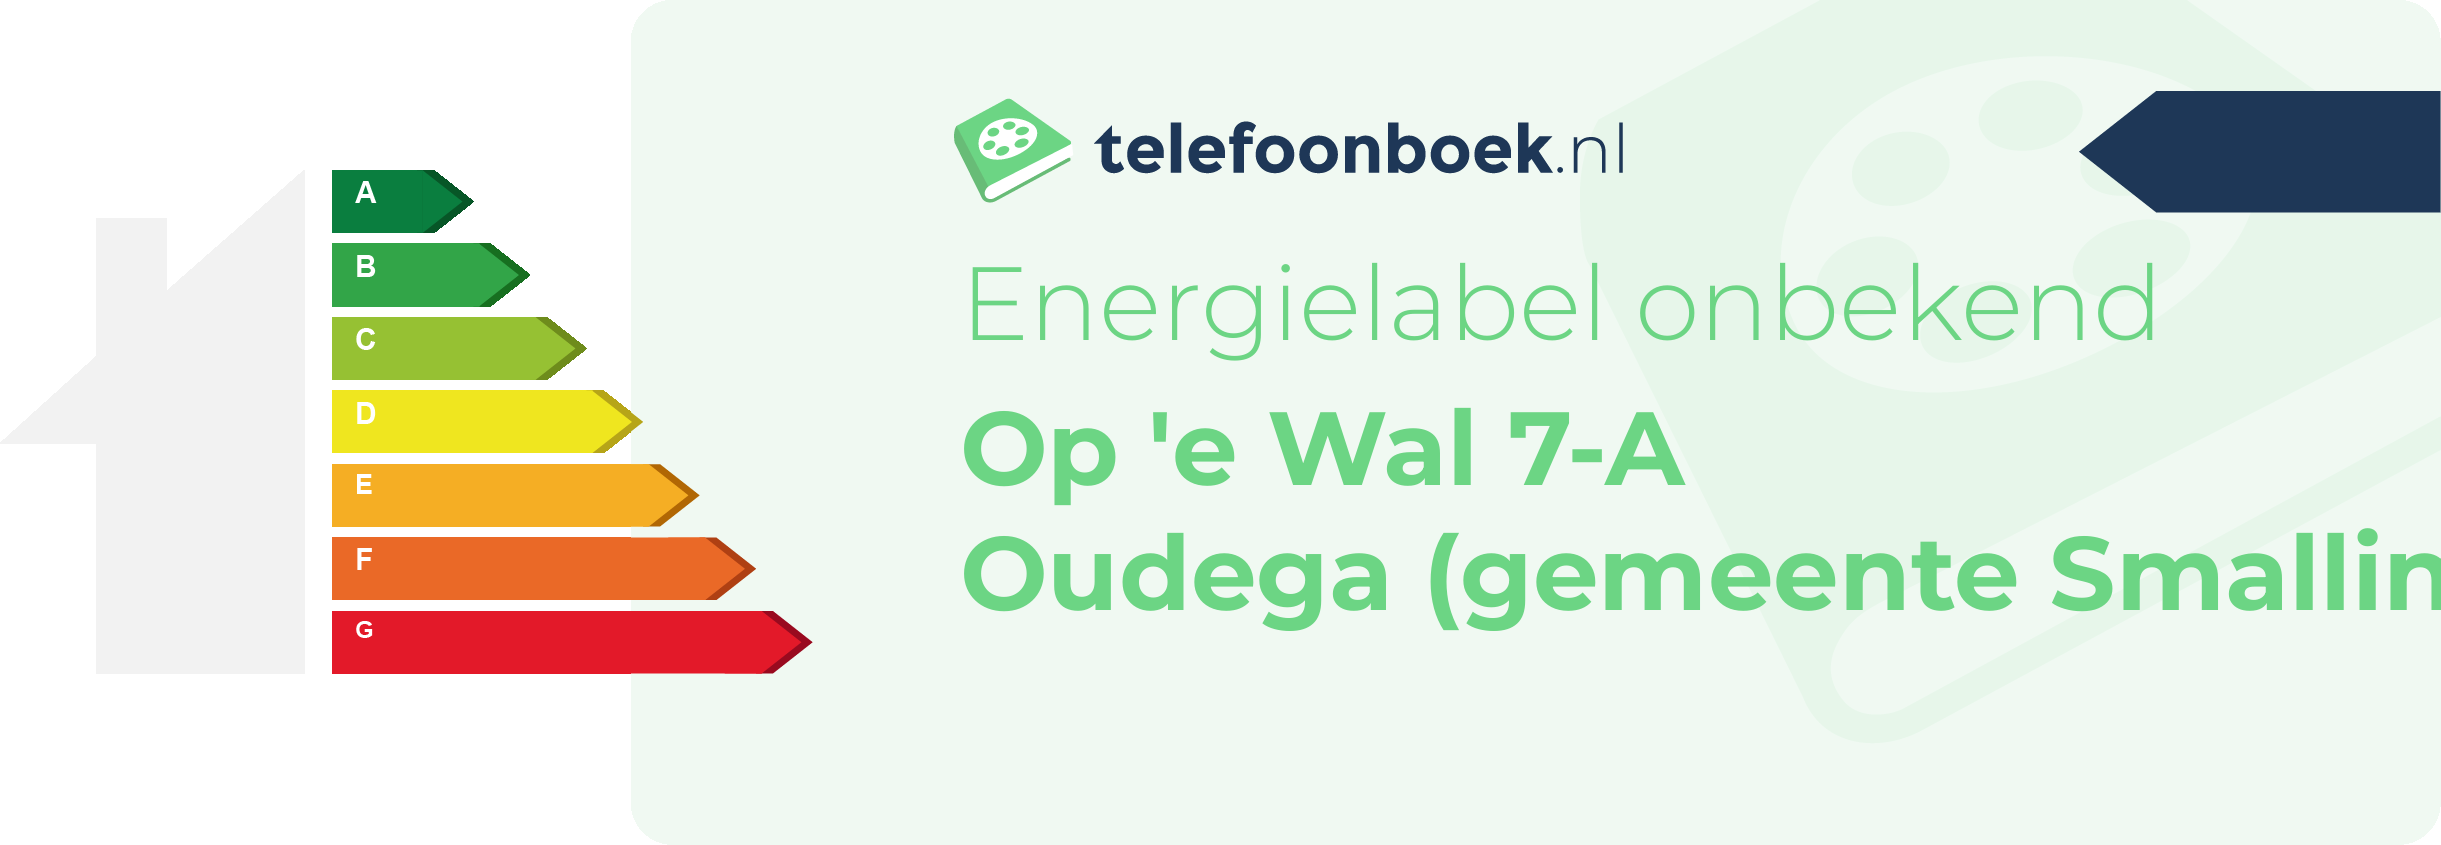 Energielabel Op 'e Wal 7-A Oudega (gemeente Smallingerland Friesland)